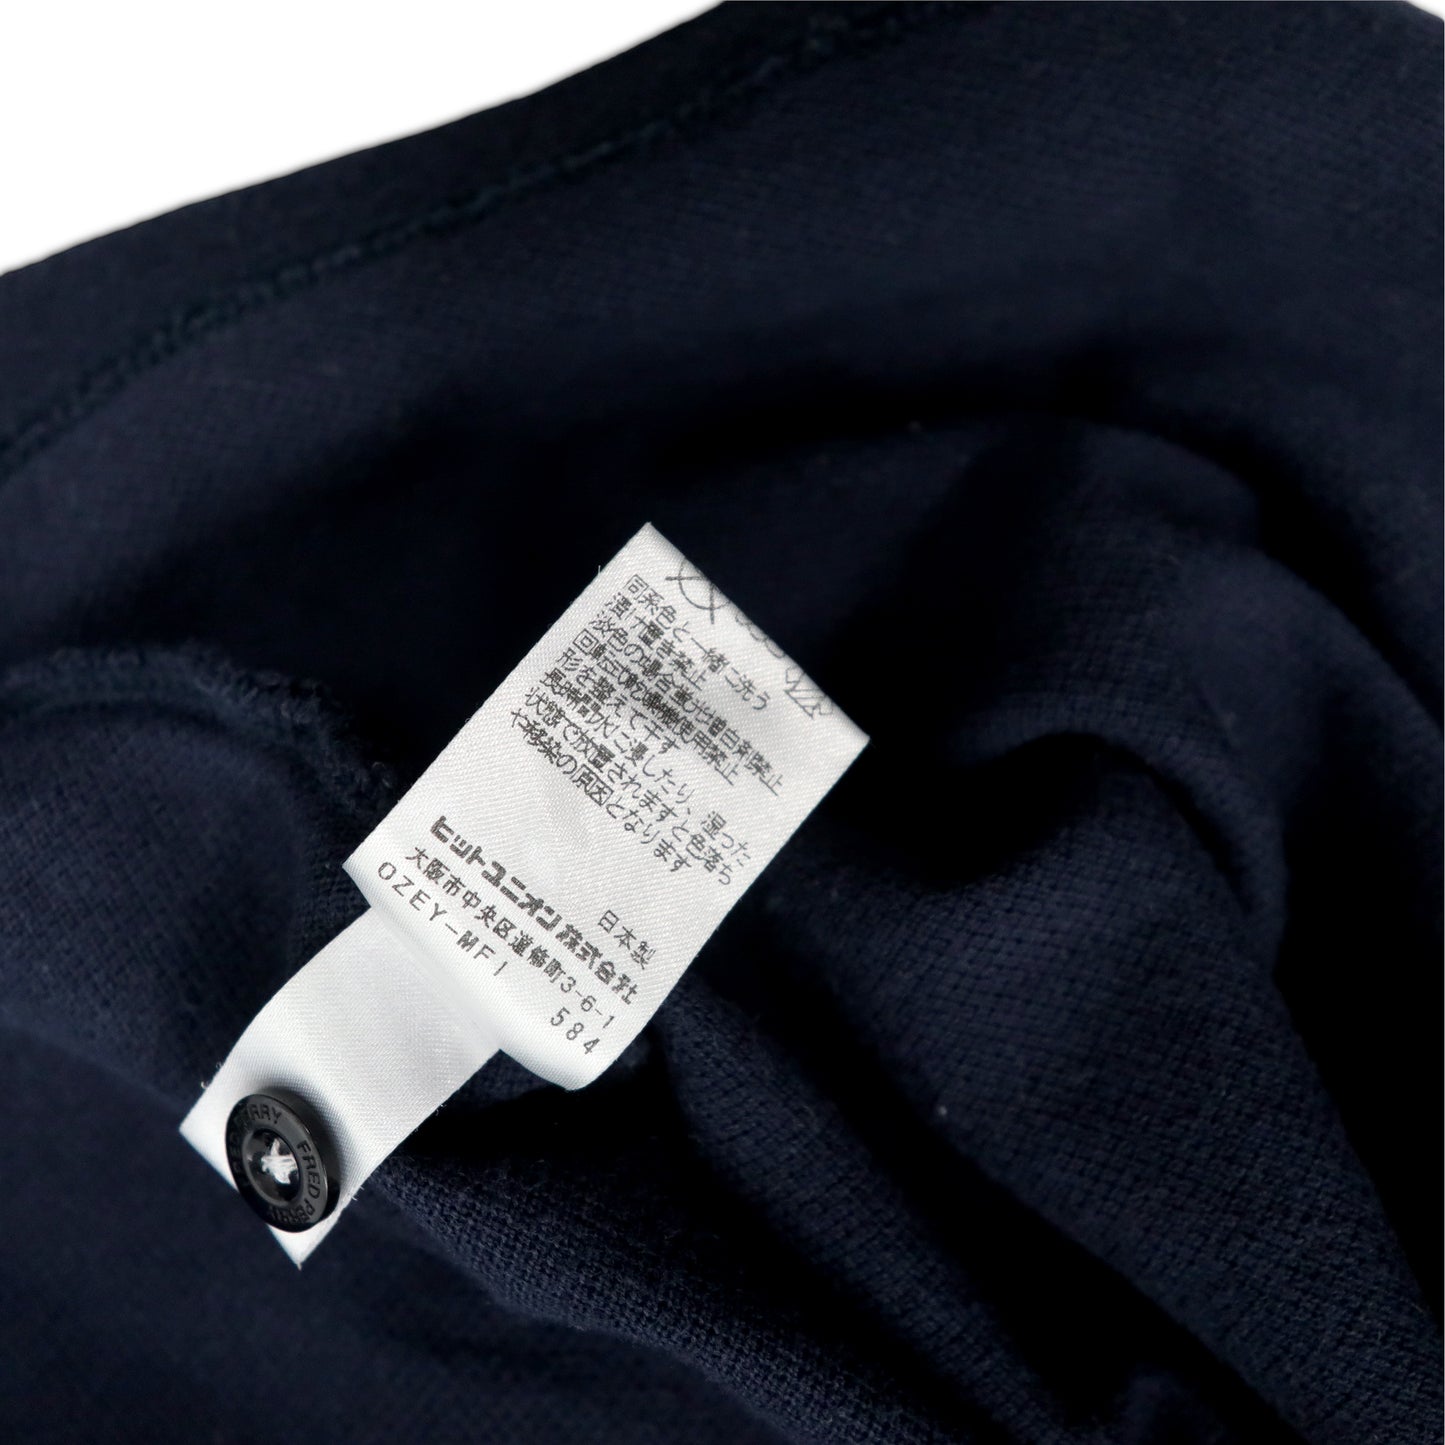 FRED PERRY モッズ ポロシャツ M ネイビー コットン ターゲットマーク ワンポイントロゴ F1226 日本製